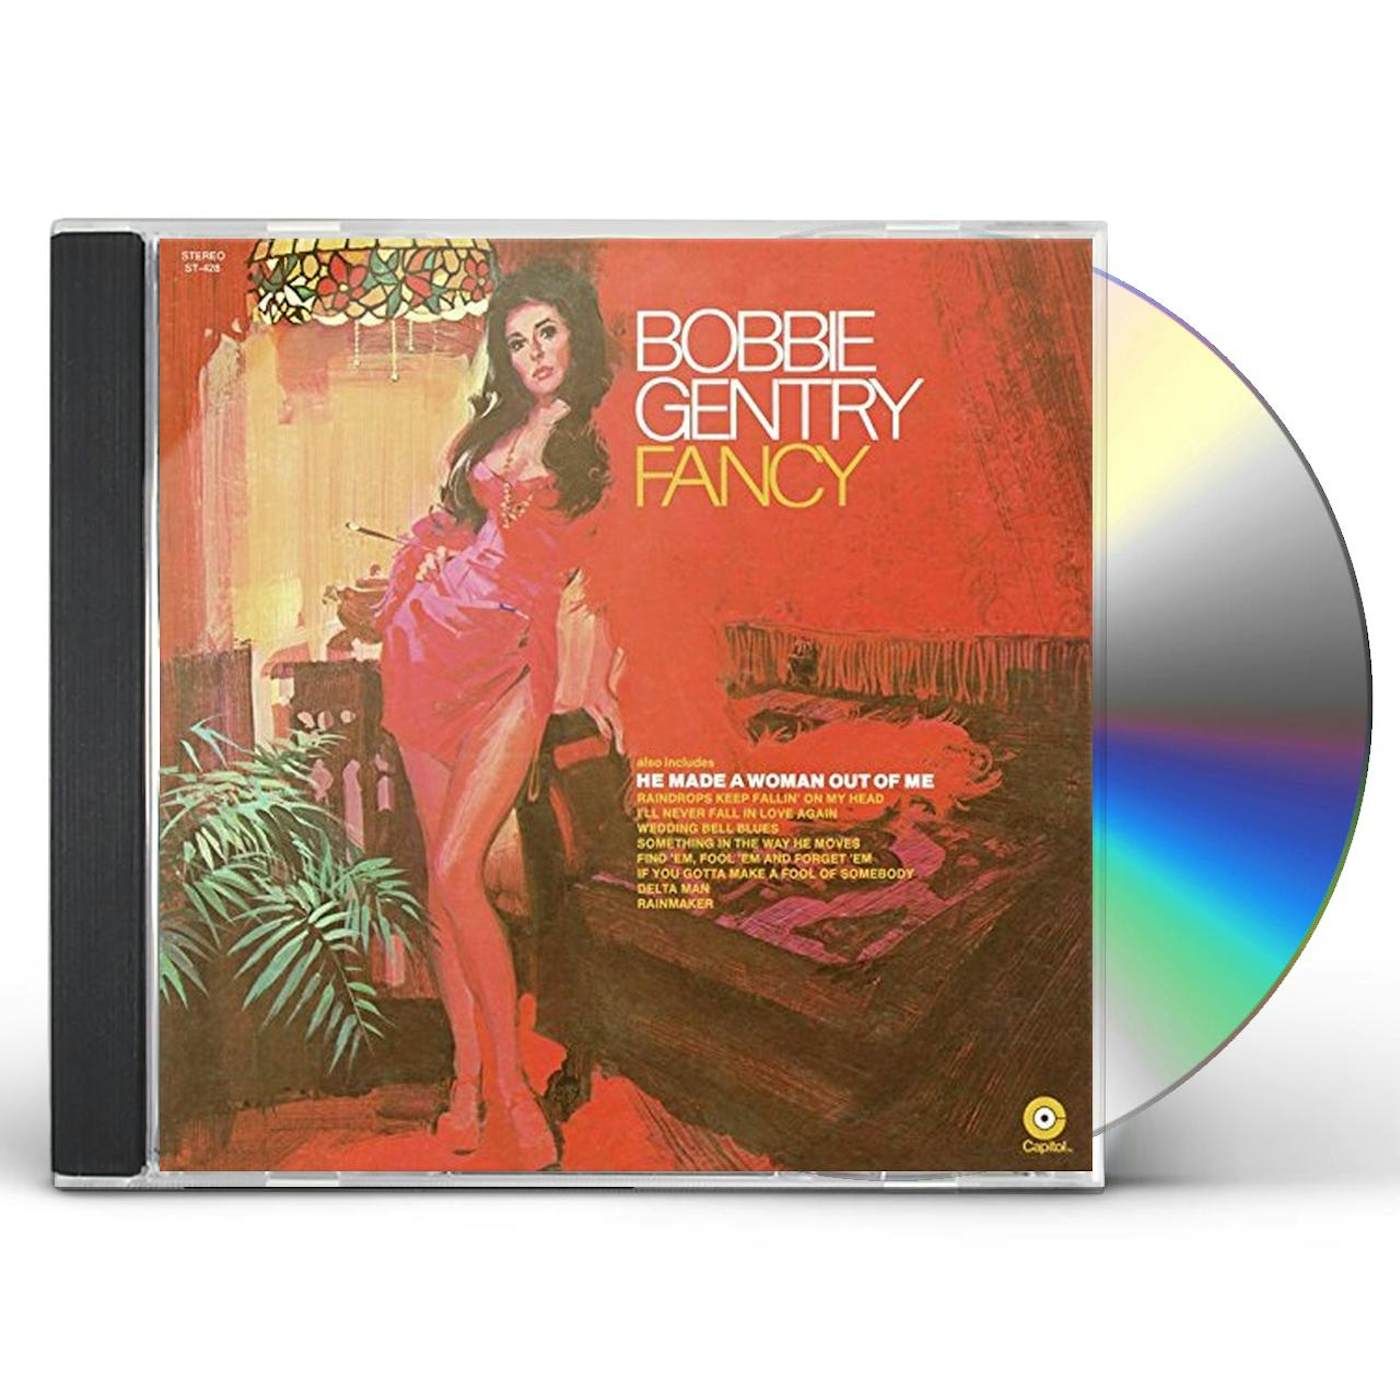 Bobbie Gentry FANCY CD